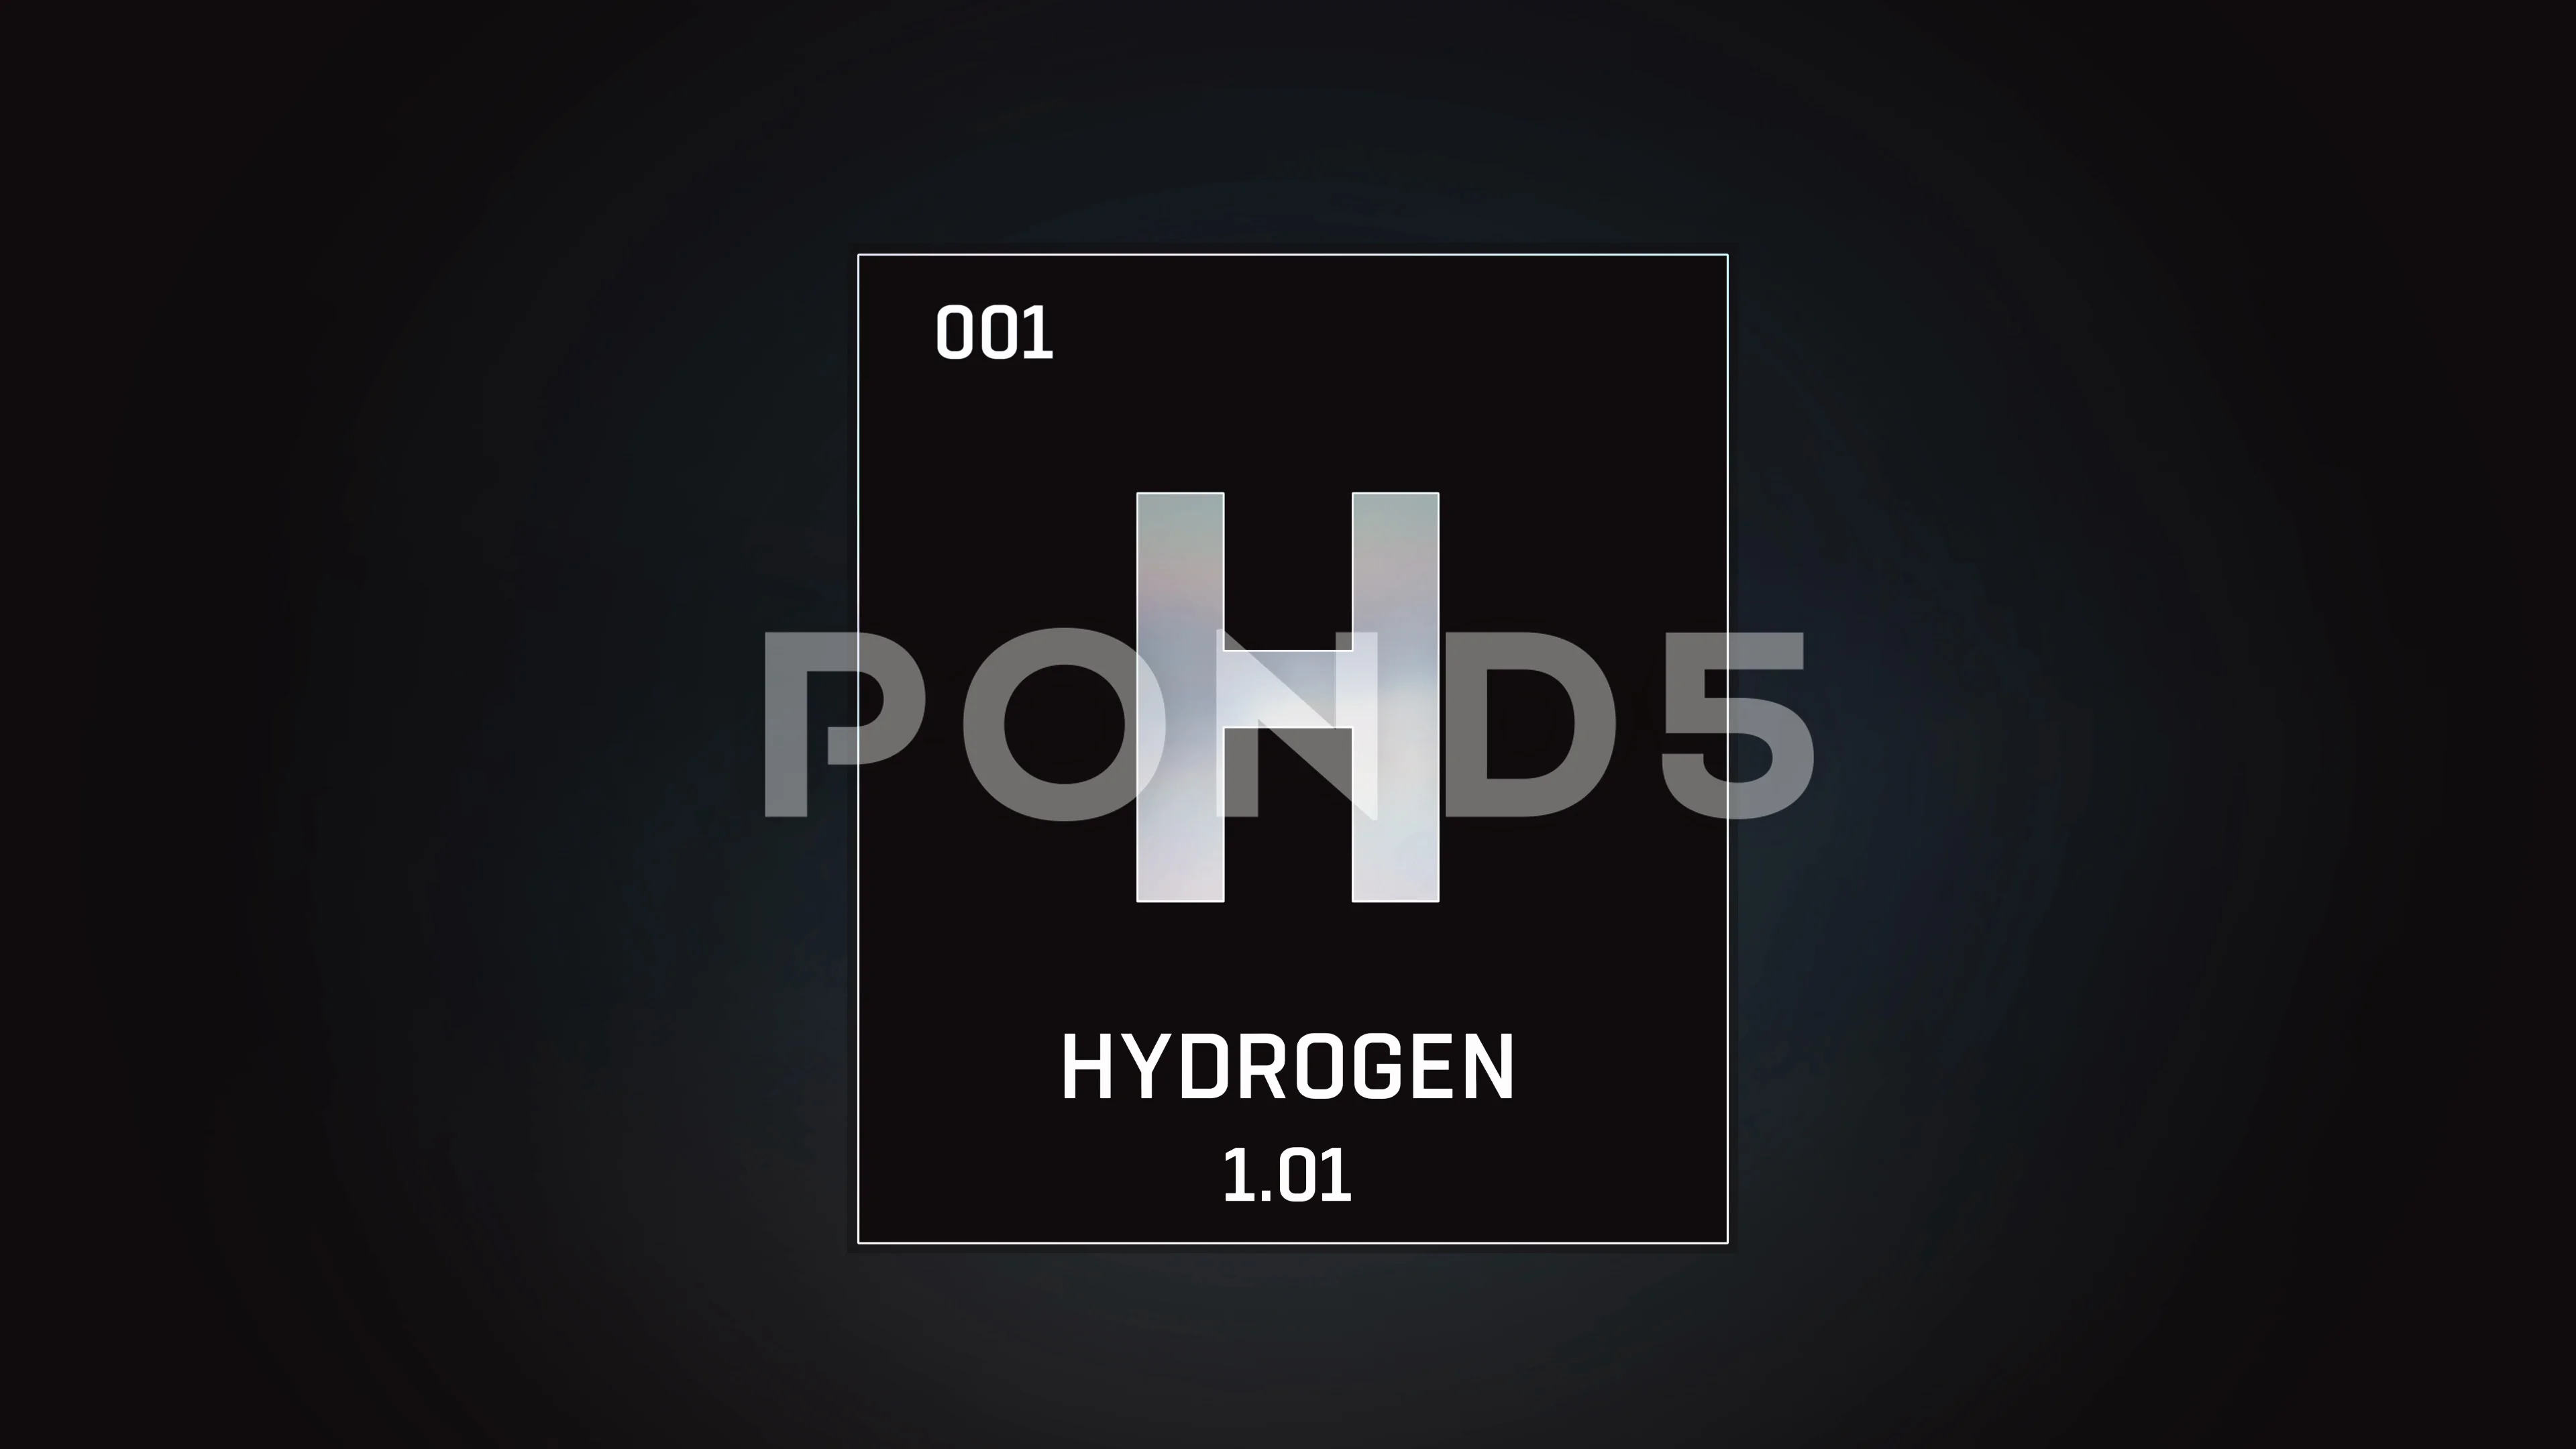 hydrogen atom periodic table